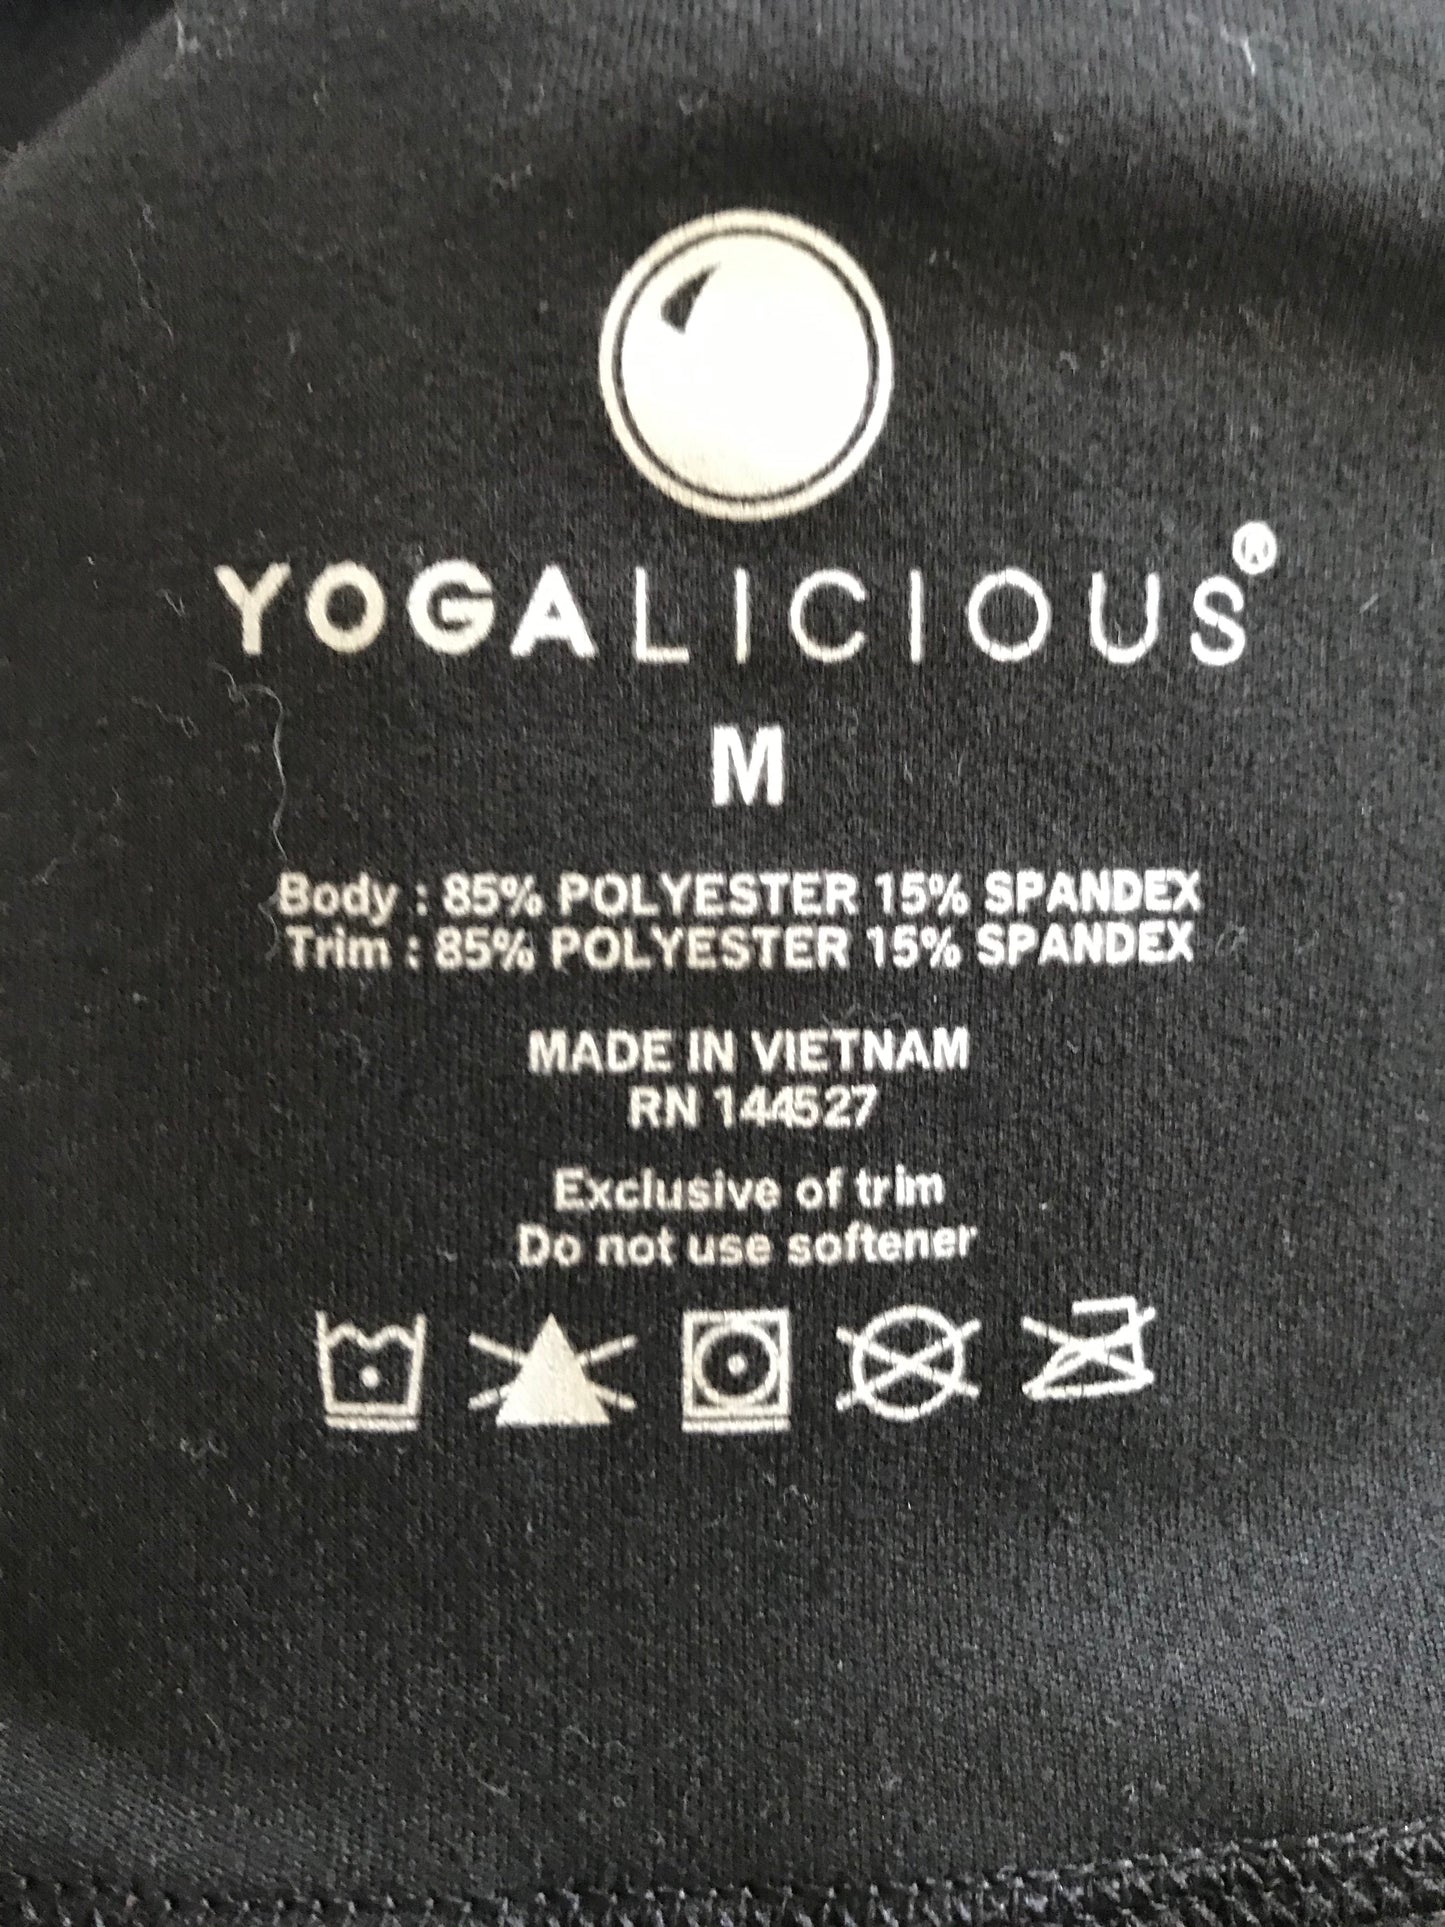 Yogalicious yoga pants